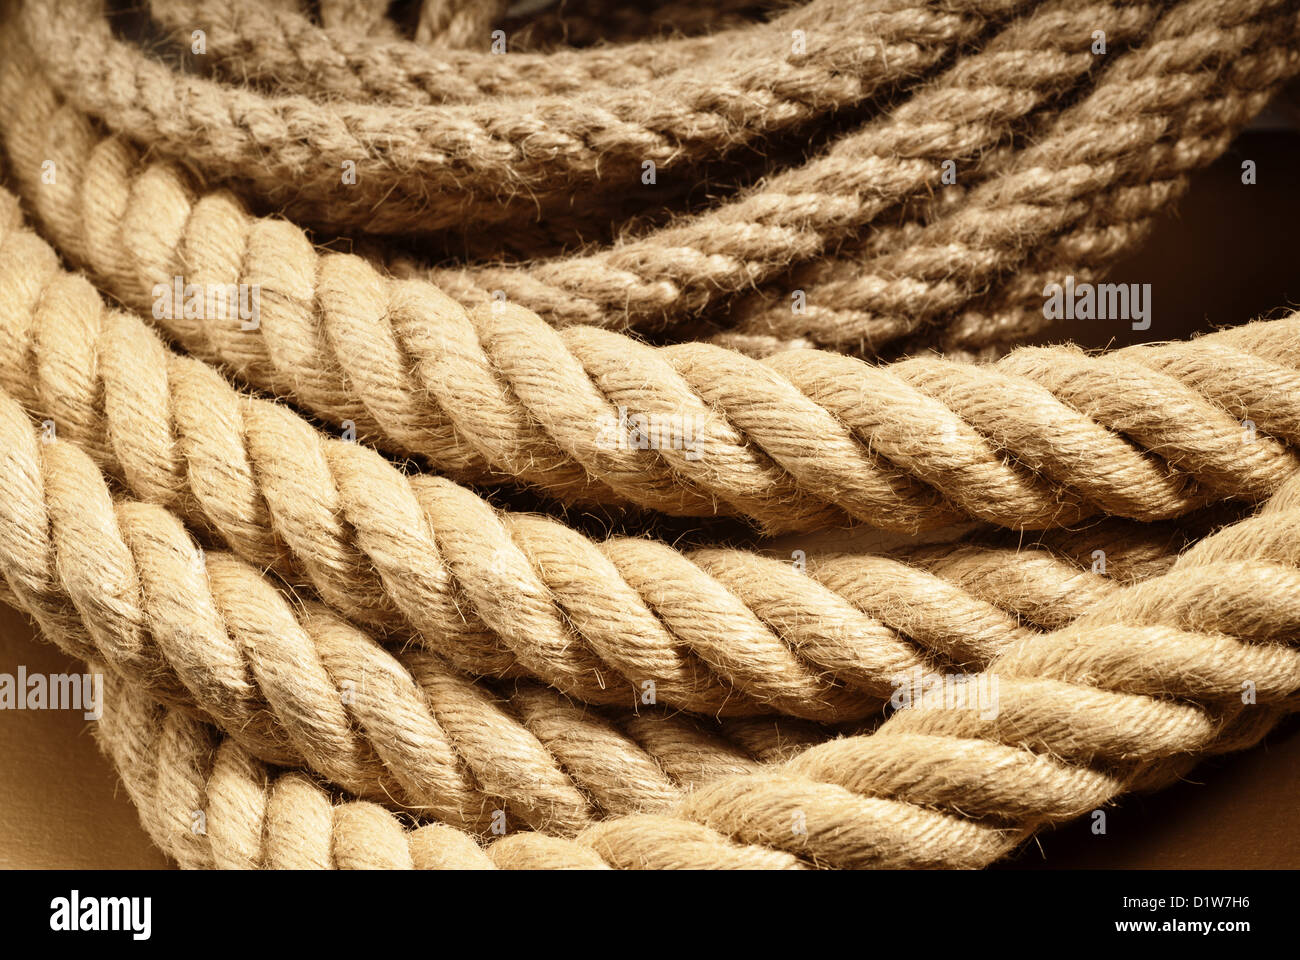 https://c8.alamy.com/comp/D1W7H6/brown-linen-boat-ropes-from-natural-fiber-D1W7H6.jpg